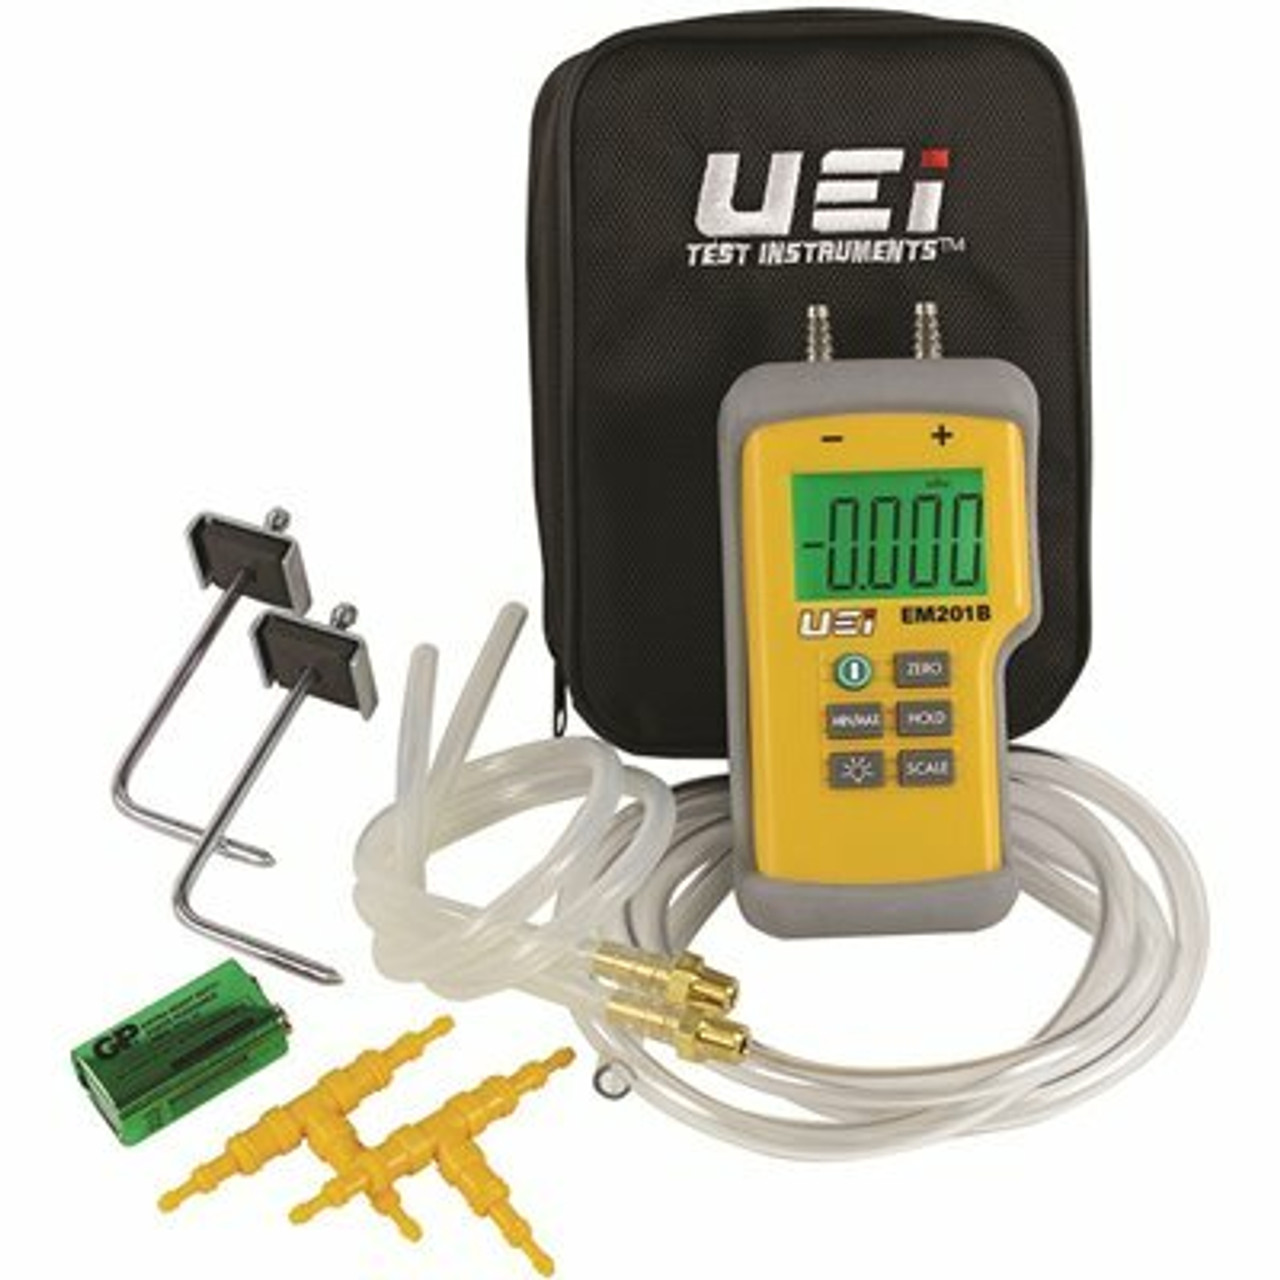 Uei Test Instruments Uei Em201Spkit 6 " Dual Input Manometer Static Pressure Kit ± 6 0" Inh2O Gauge